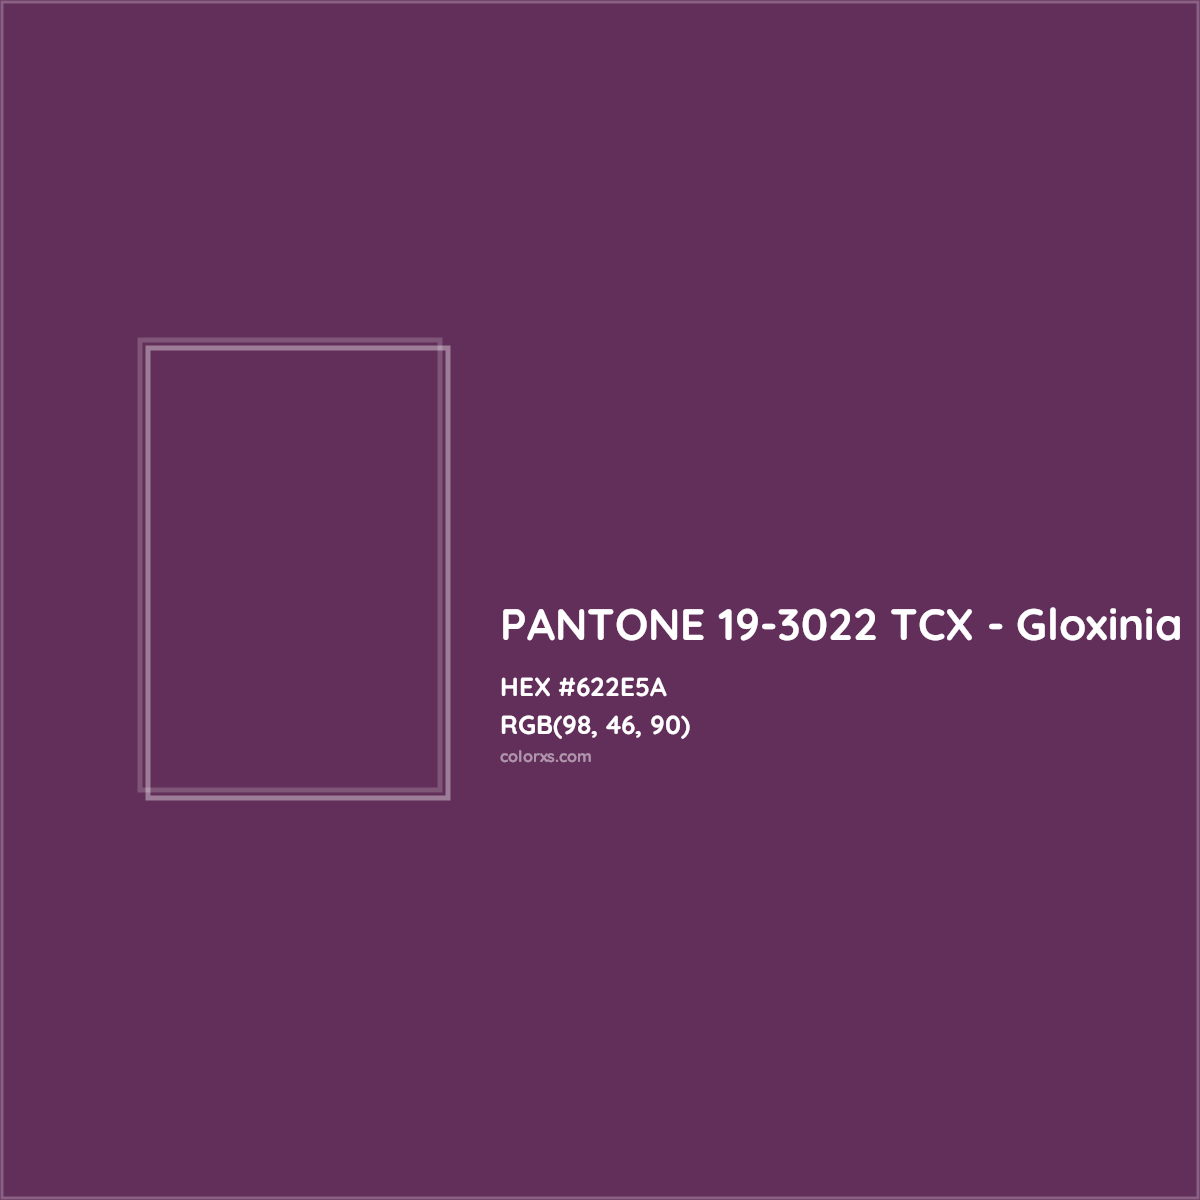 HEX #622E5A PANTONE 19-3022 TCX - Gloxinia CMS Pantone TCX - Color Code